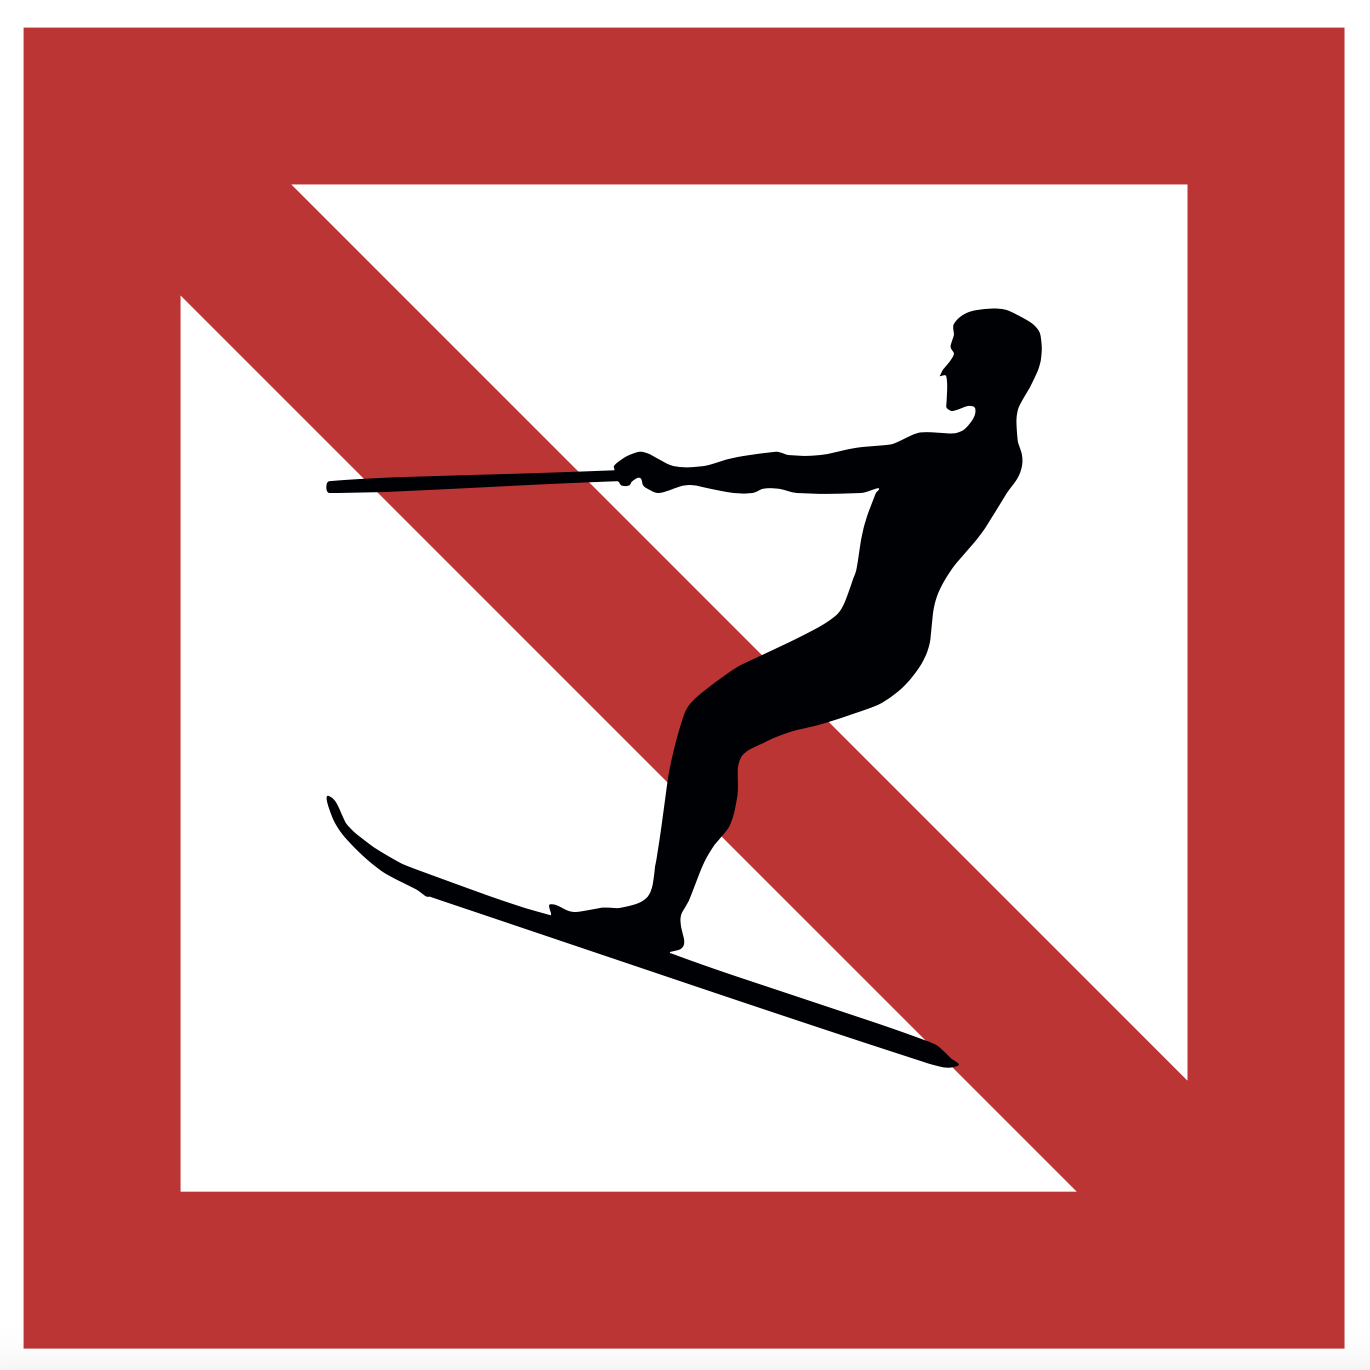 Panneau fluvial A14 "Pratique du ski nautique interdite"